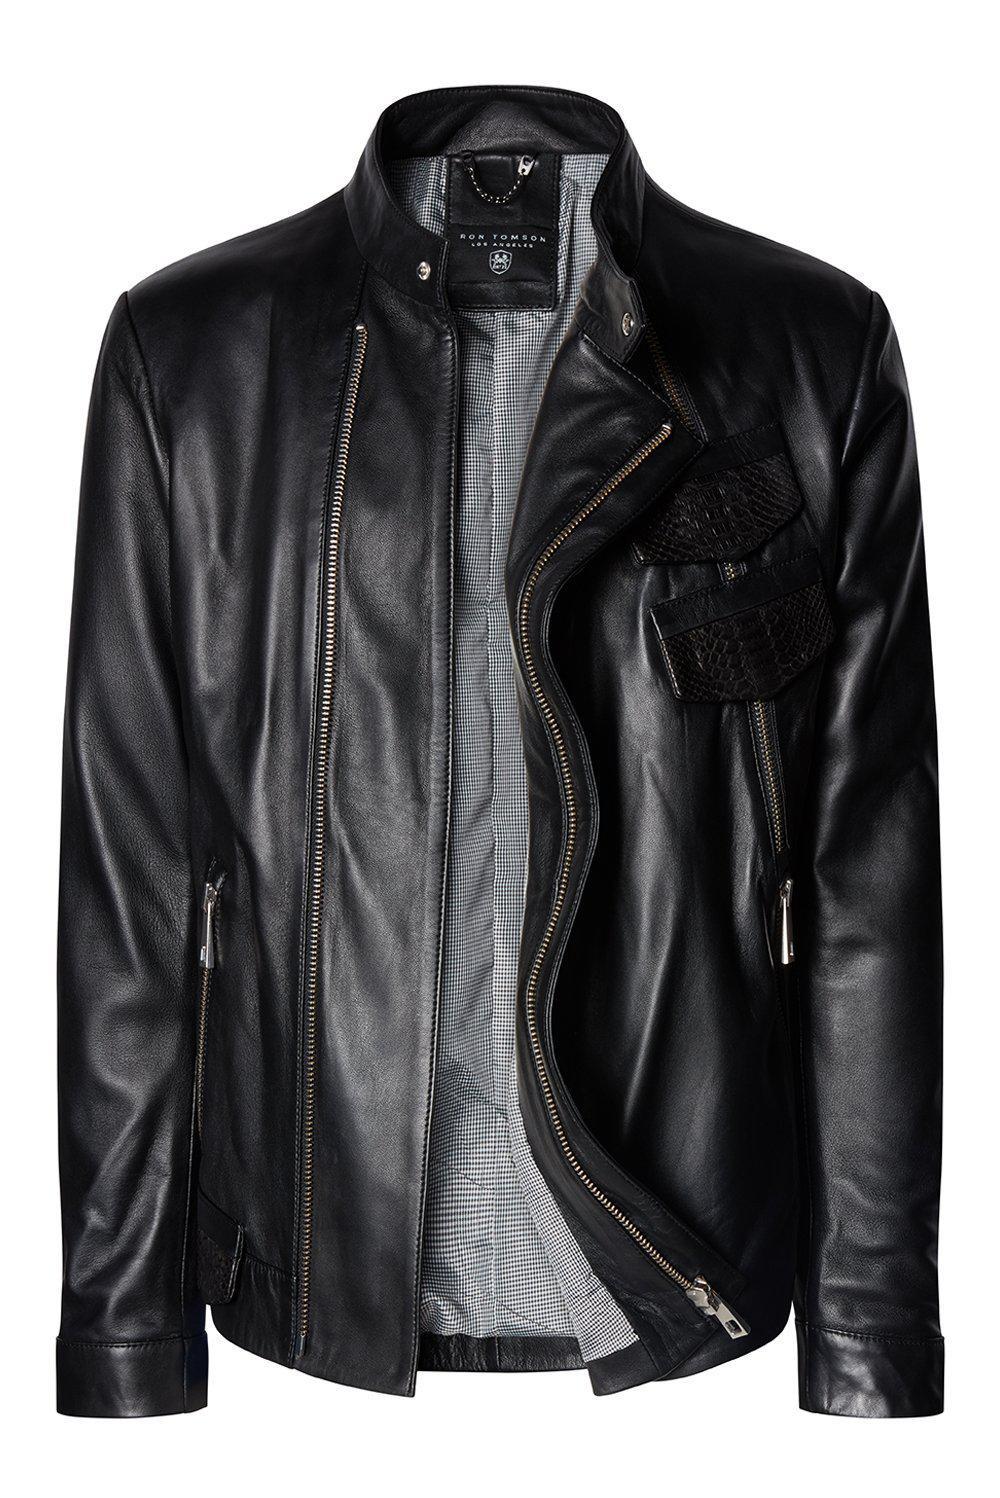 Heartbreaker Leather Jacket - Black Multi - Ron Tomson